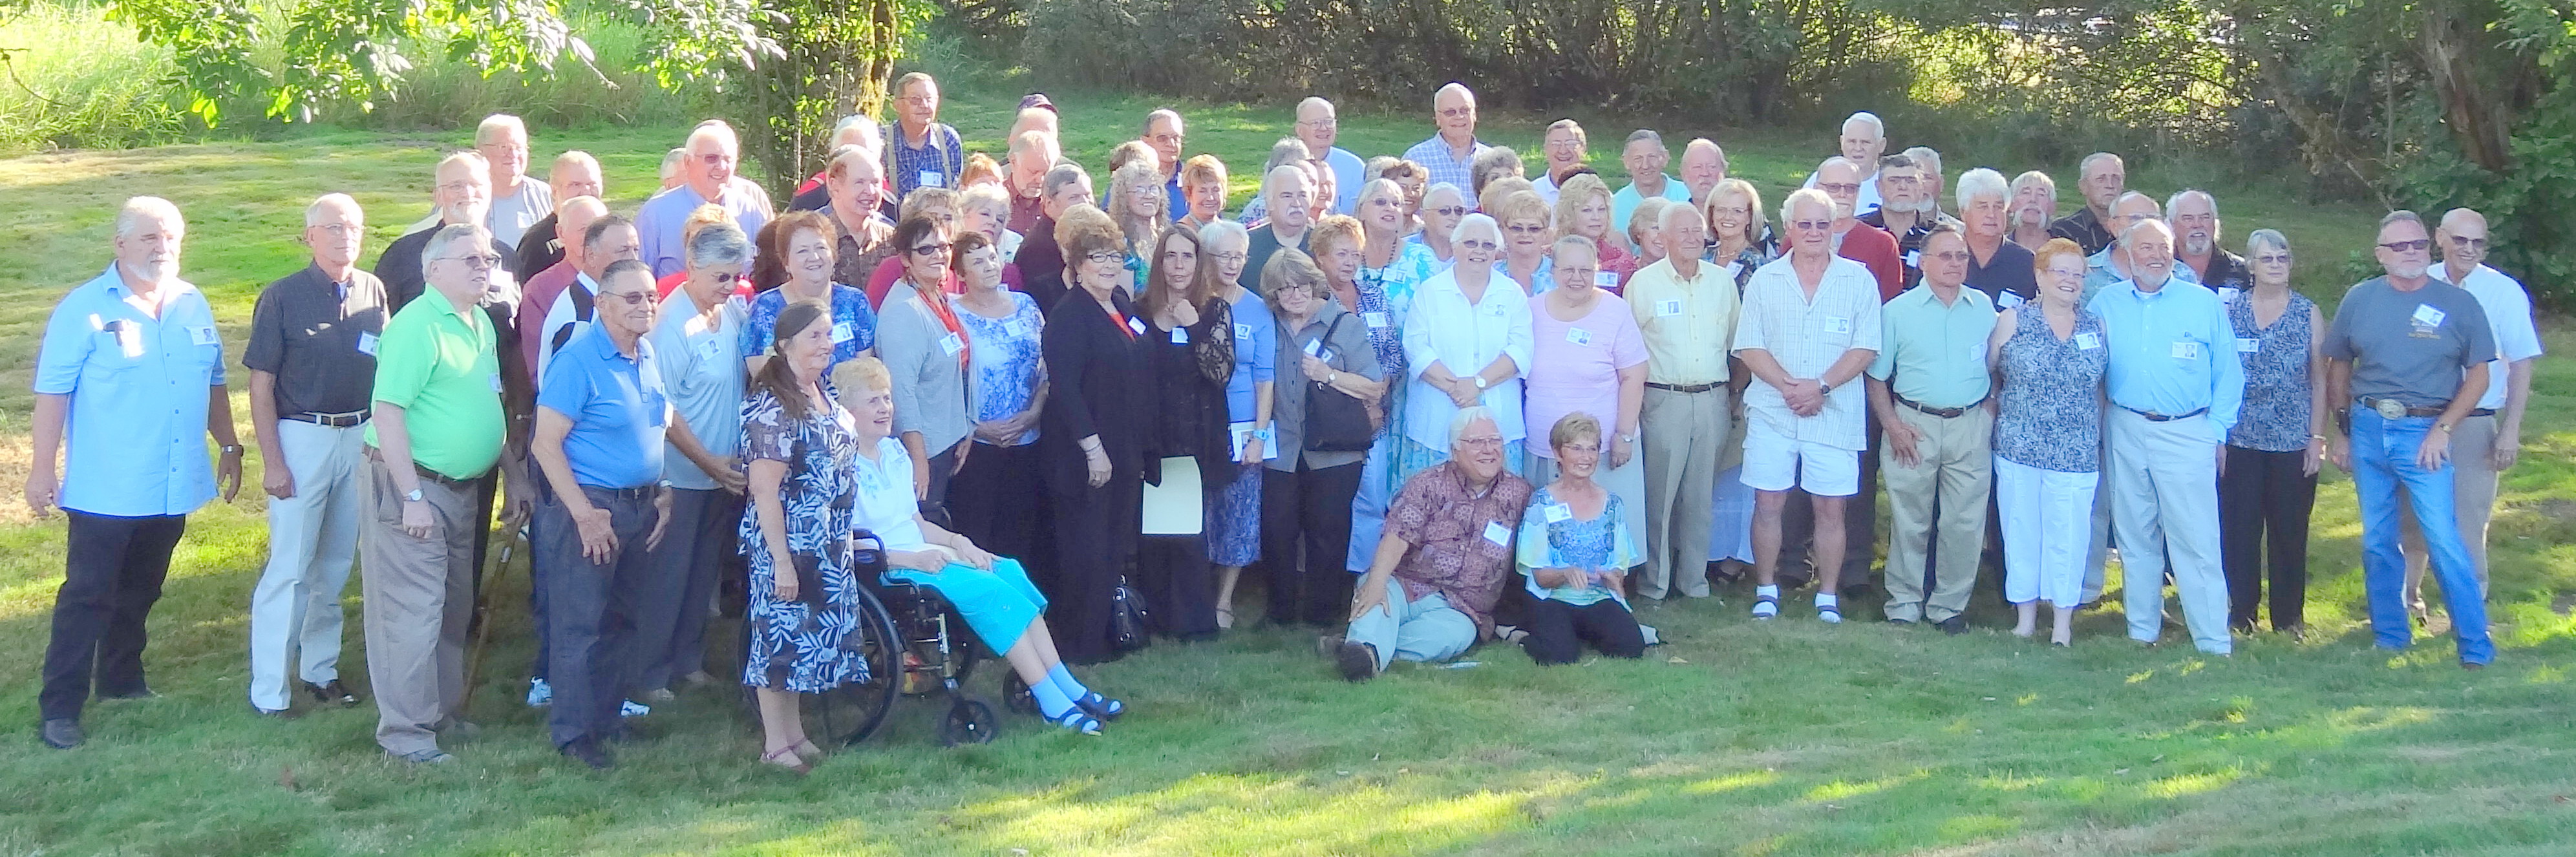 50 Year Class Reunion of 2012